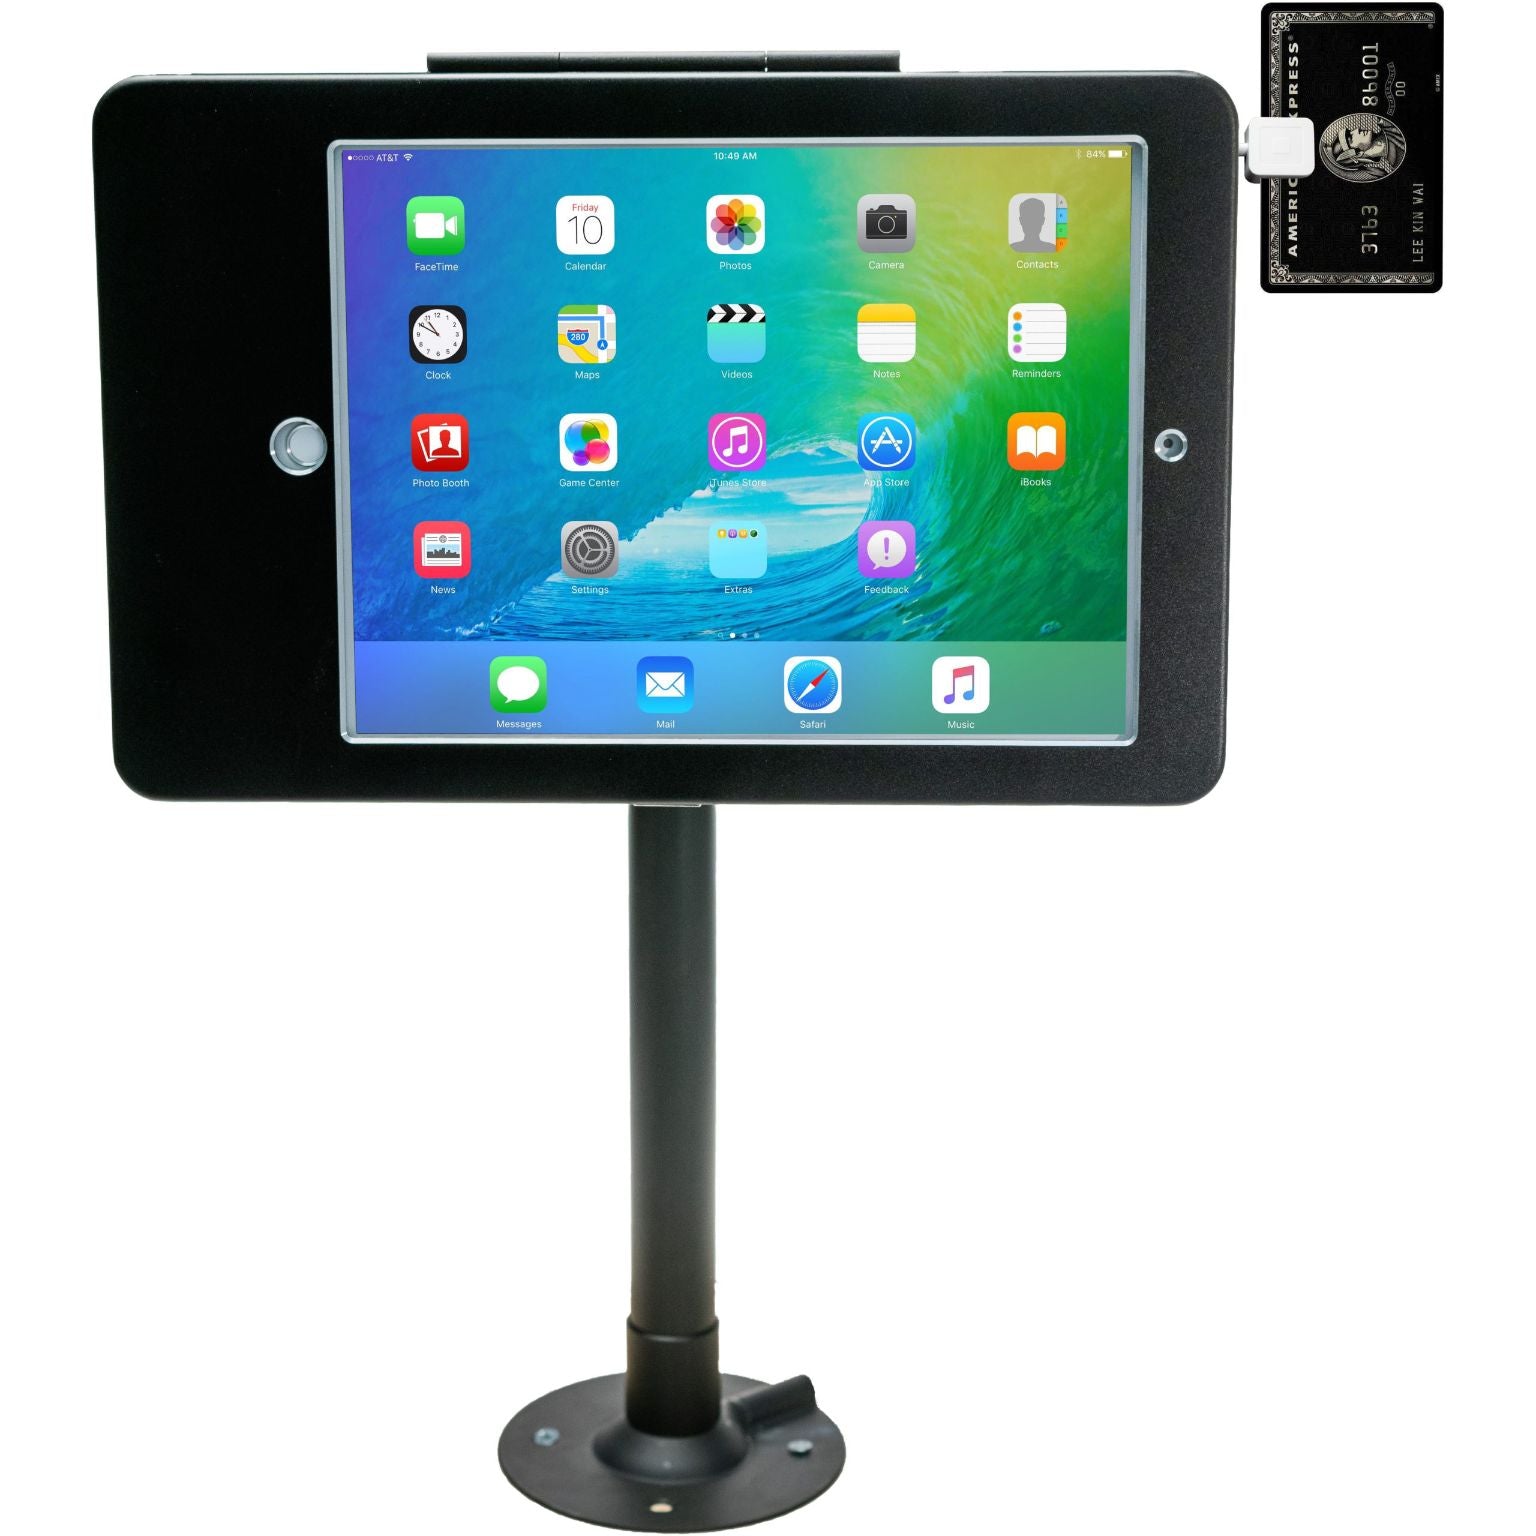 Height-Adjustable Tabletop Security Mount for iPad Pro 9.7, iPad (Gen. 5-6), and iPad Air (Gen. 1-2)